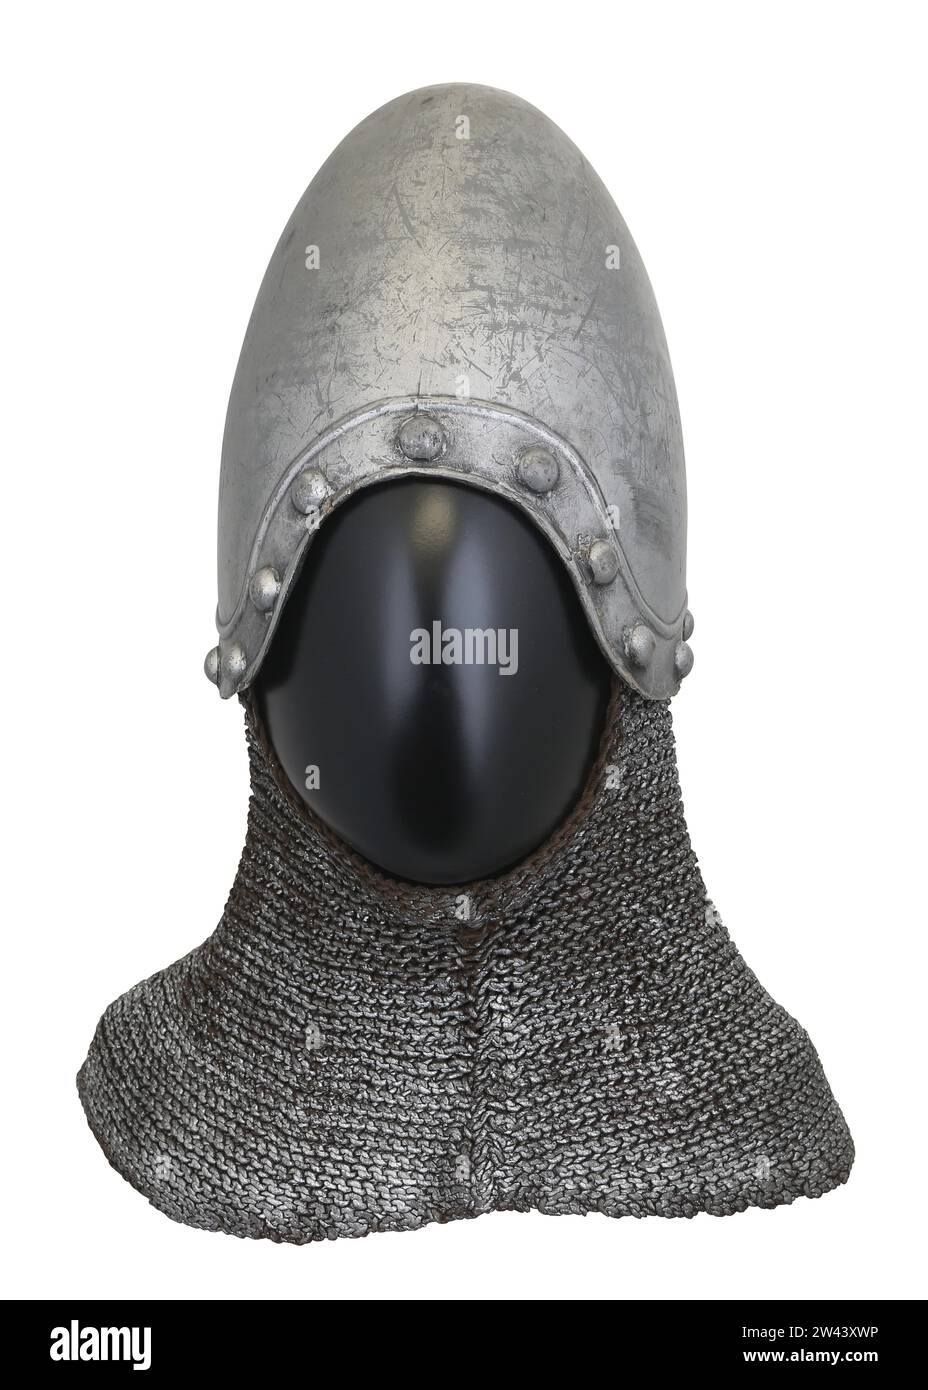 Bacinet or 'bowl' type helmet from Monty Python Stock Photo